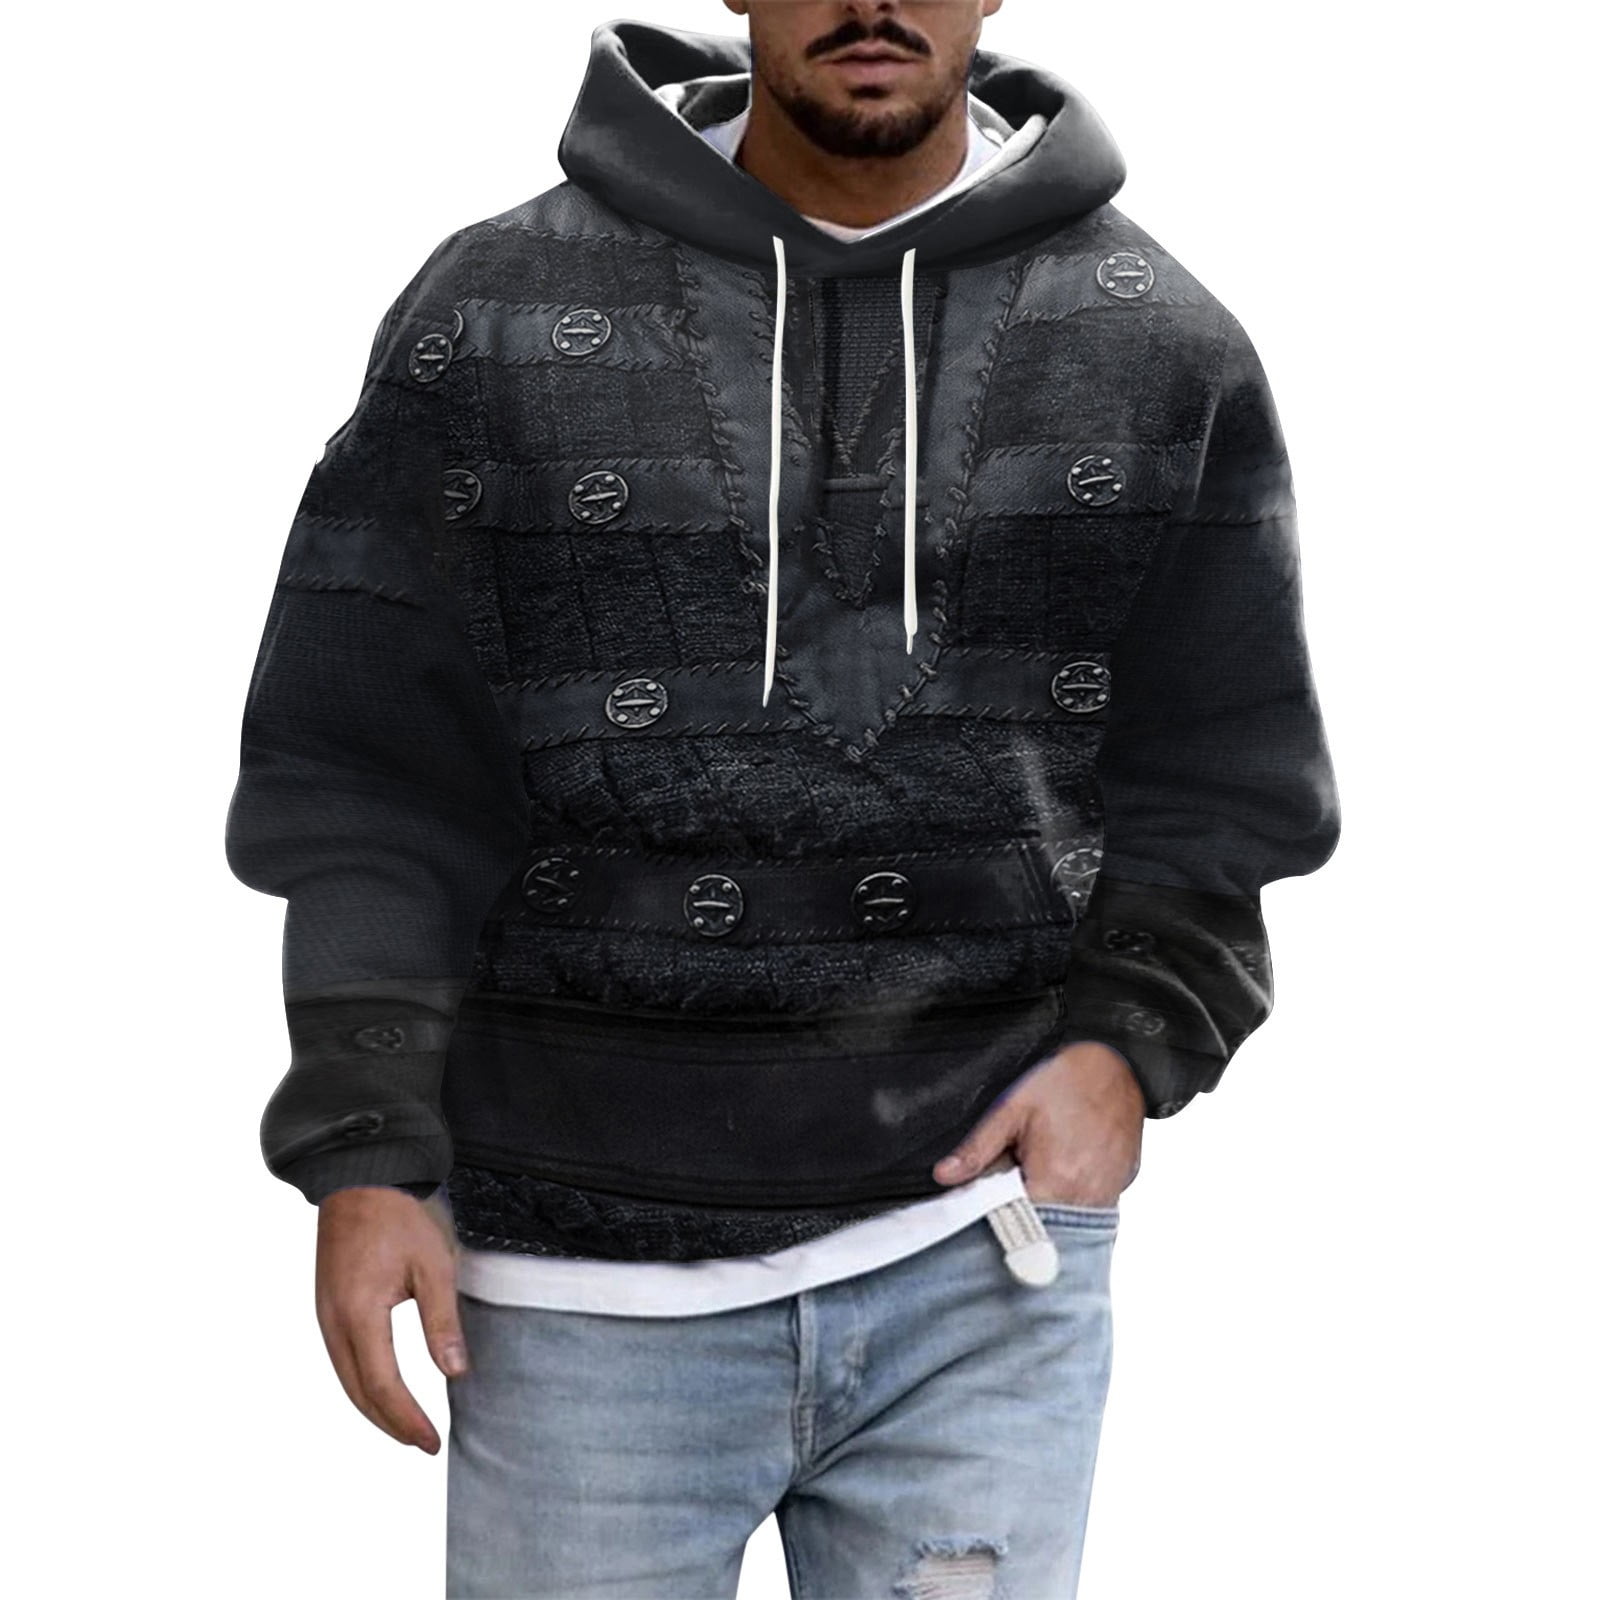 Zrbywb Men's Fashion Trend Hooded Sweater